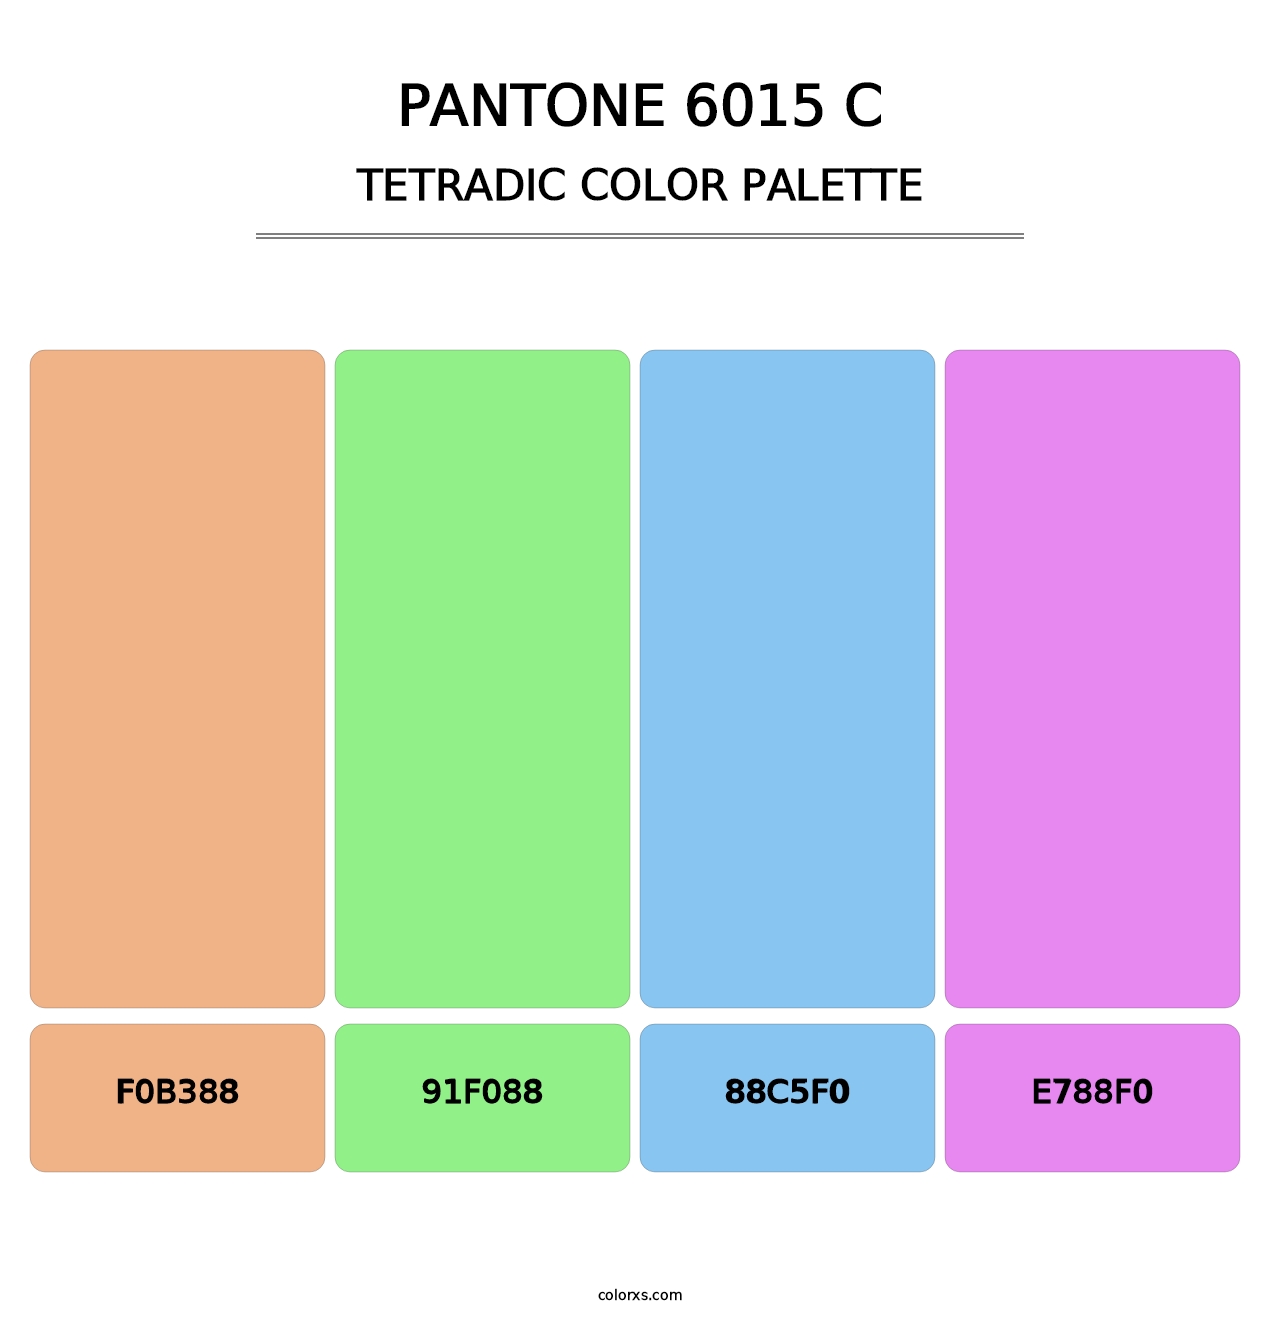 PANTONE 6015 C - Tetradic Color Palette